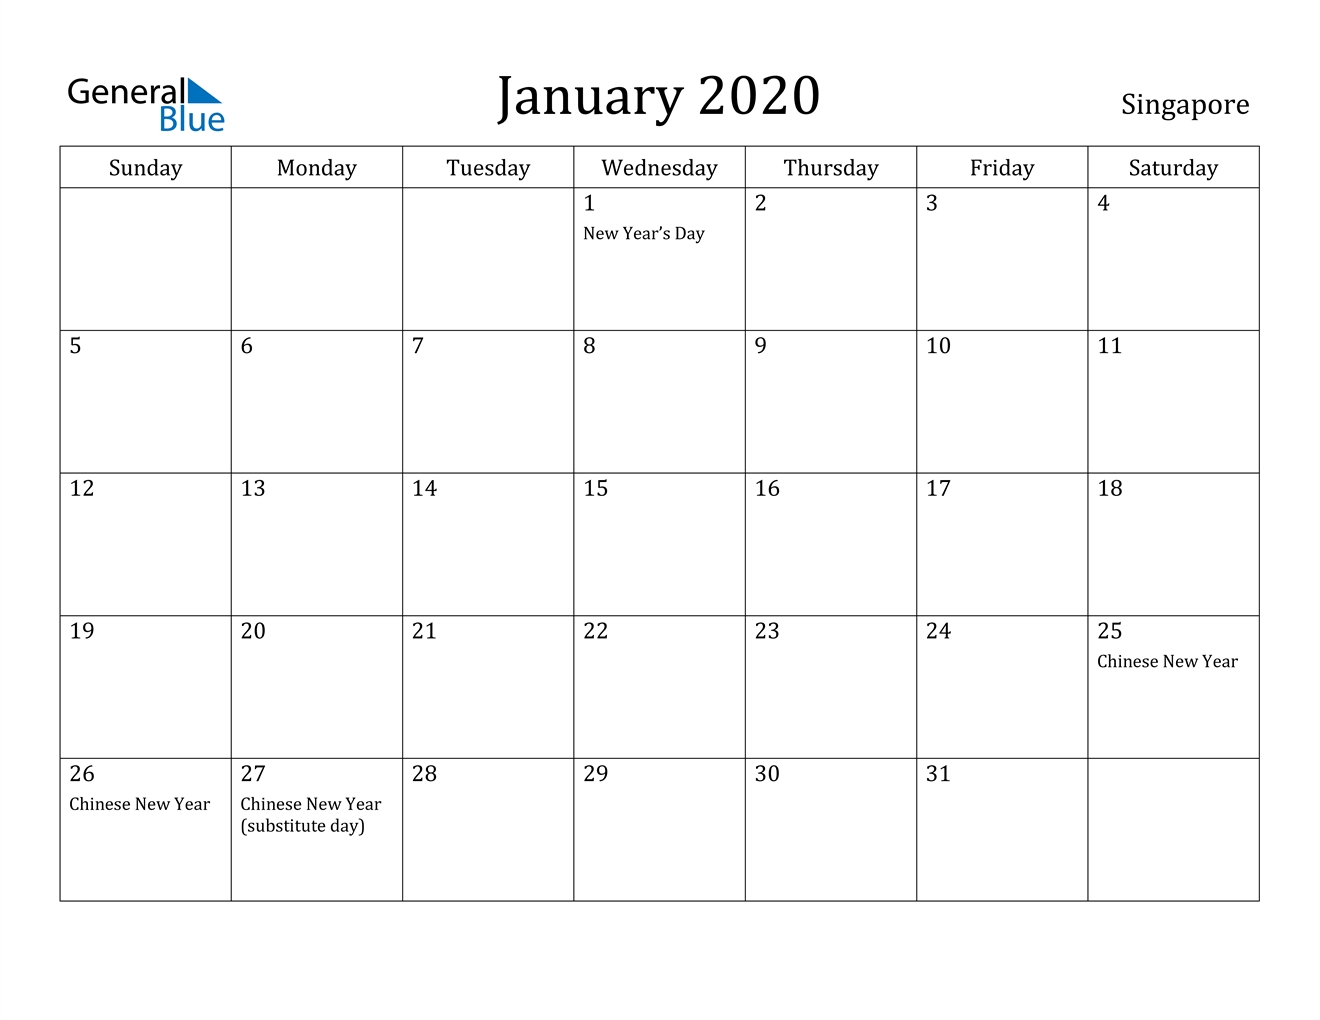 January 2020 Calendar - Singapore Impressive Year 2020 Calendar Singapore